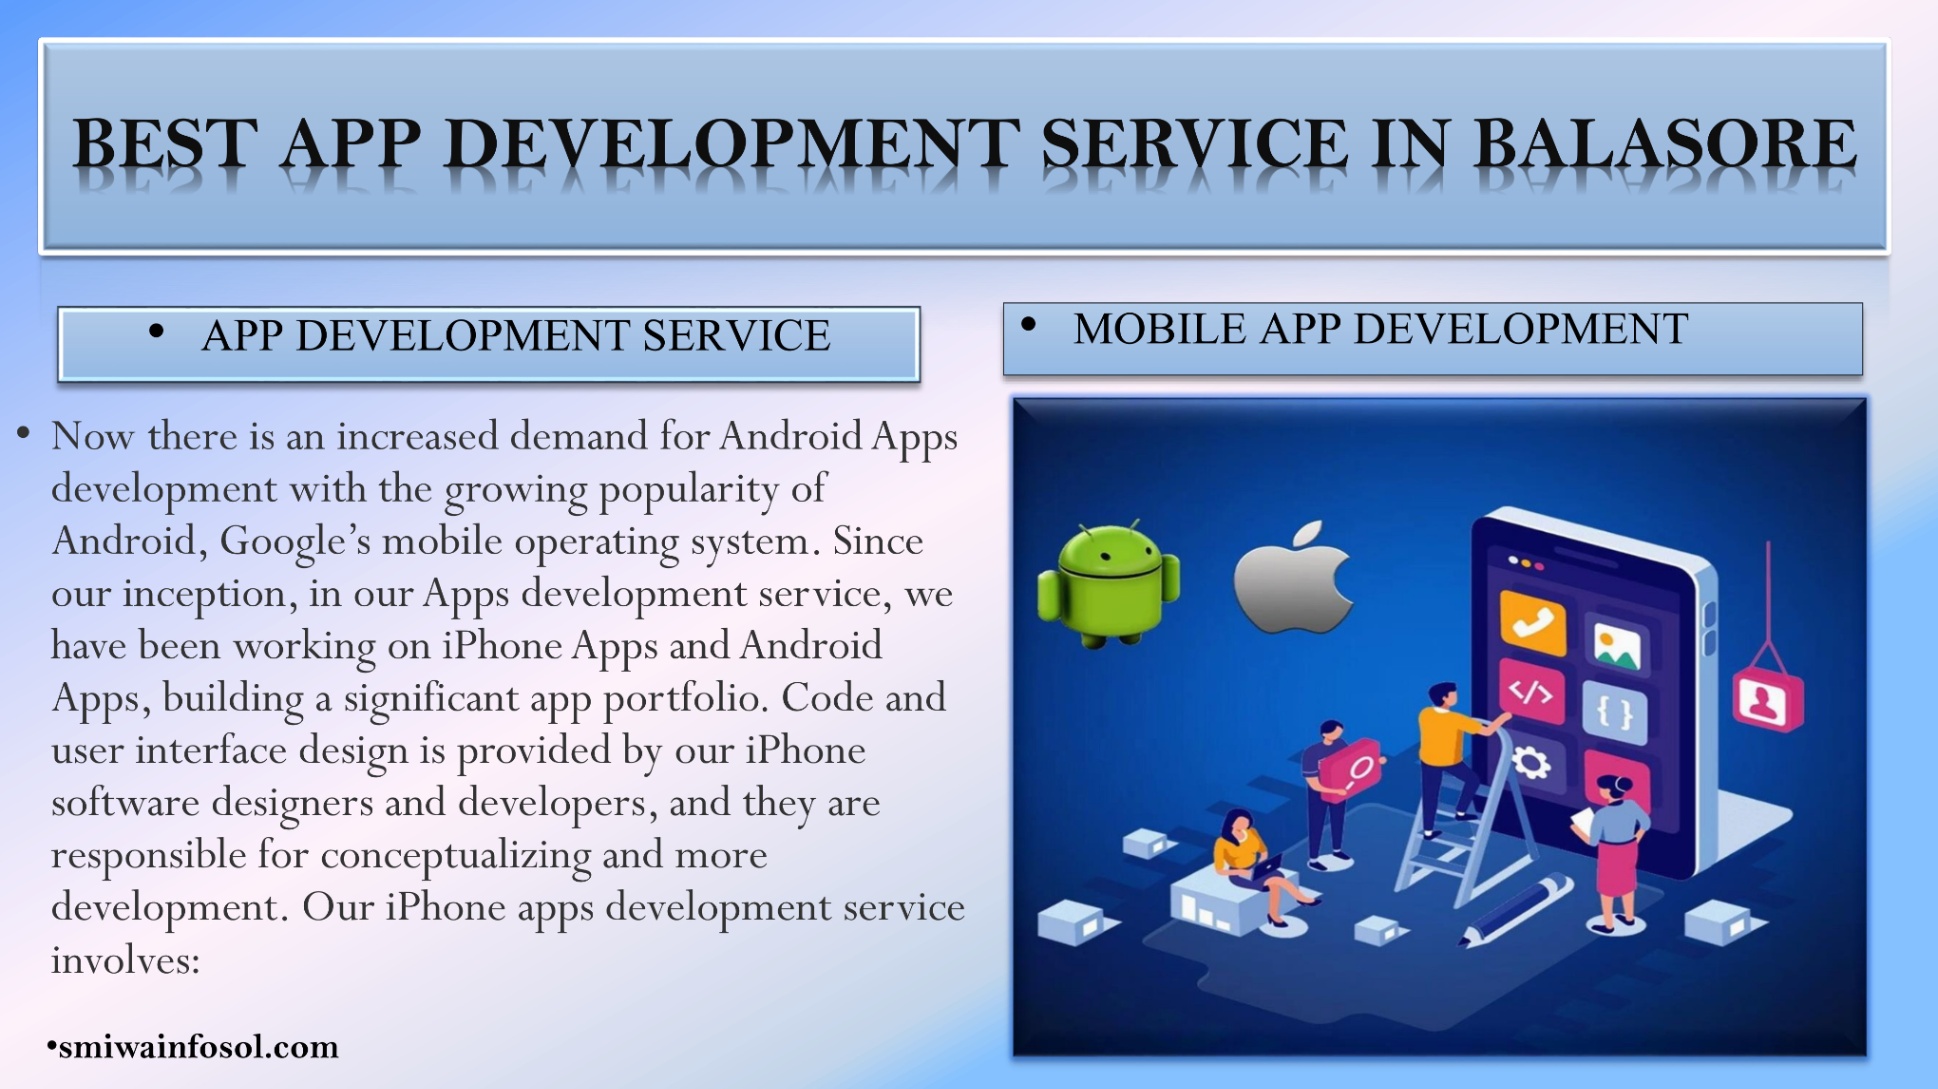 Balasore Best Mobile App Development Service Provider in Odisha